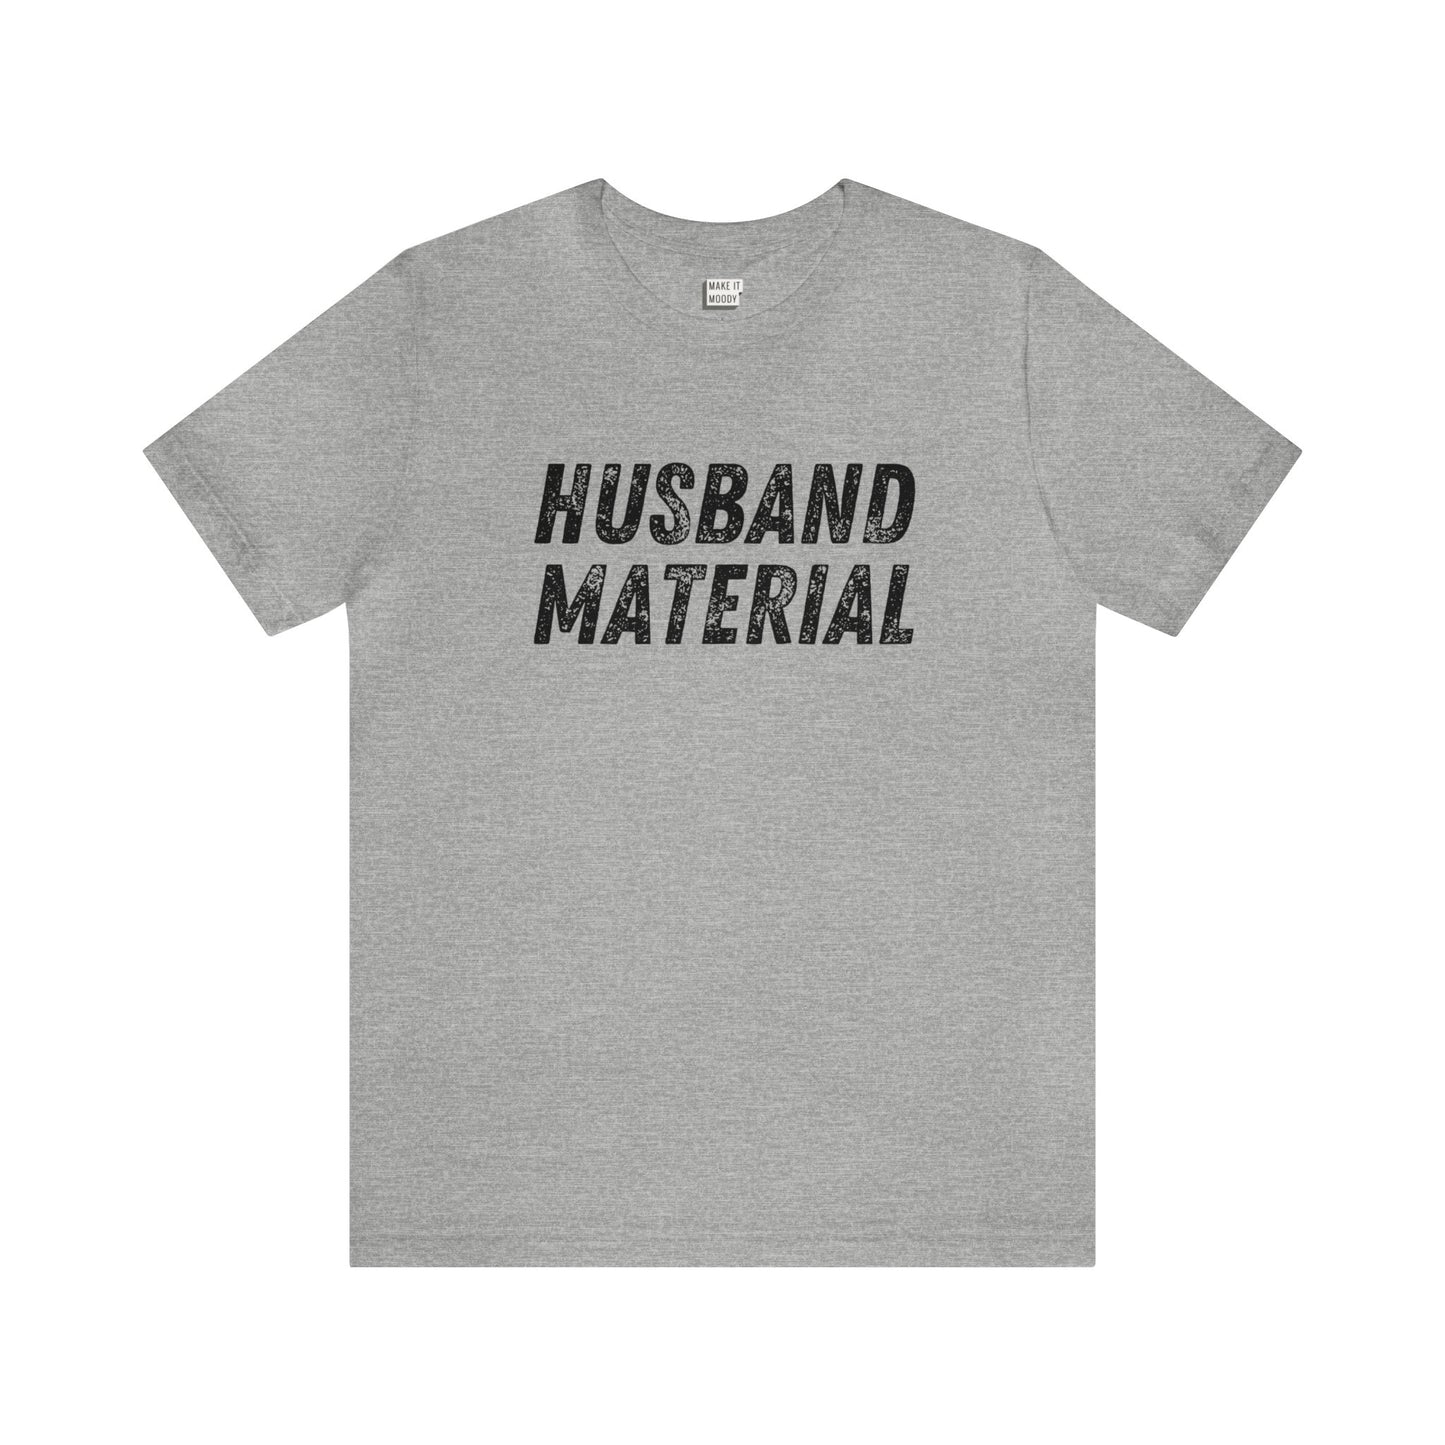 "Husband Material" Tee